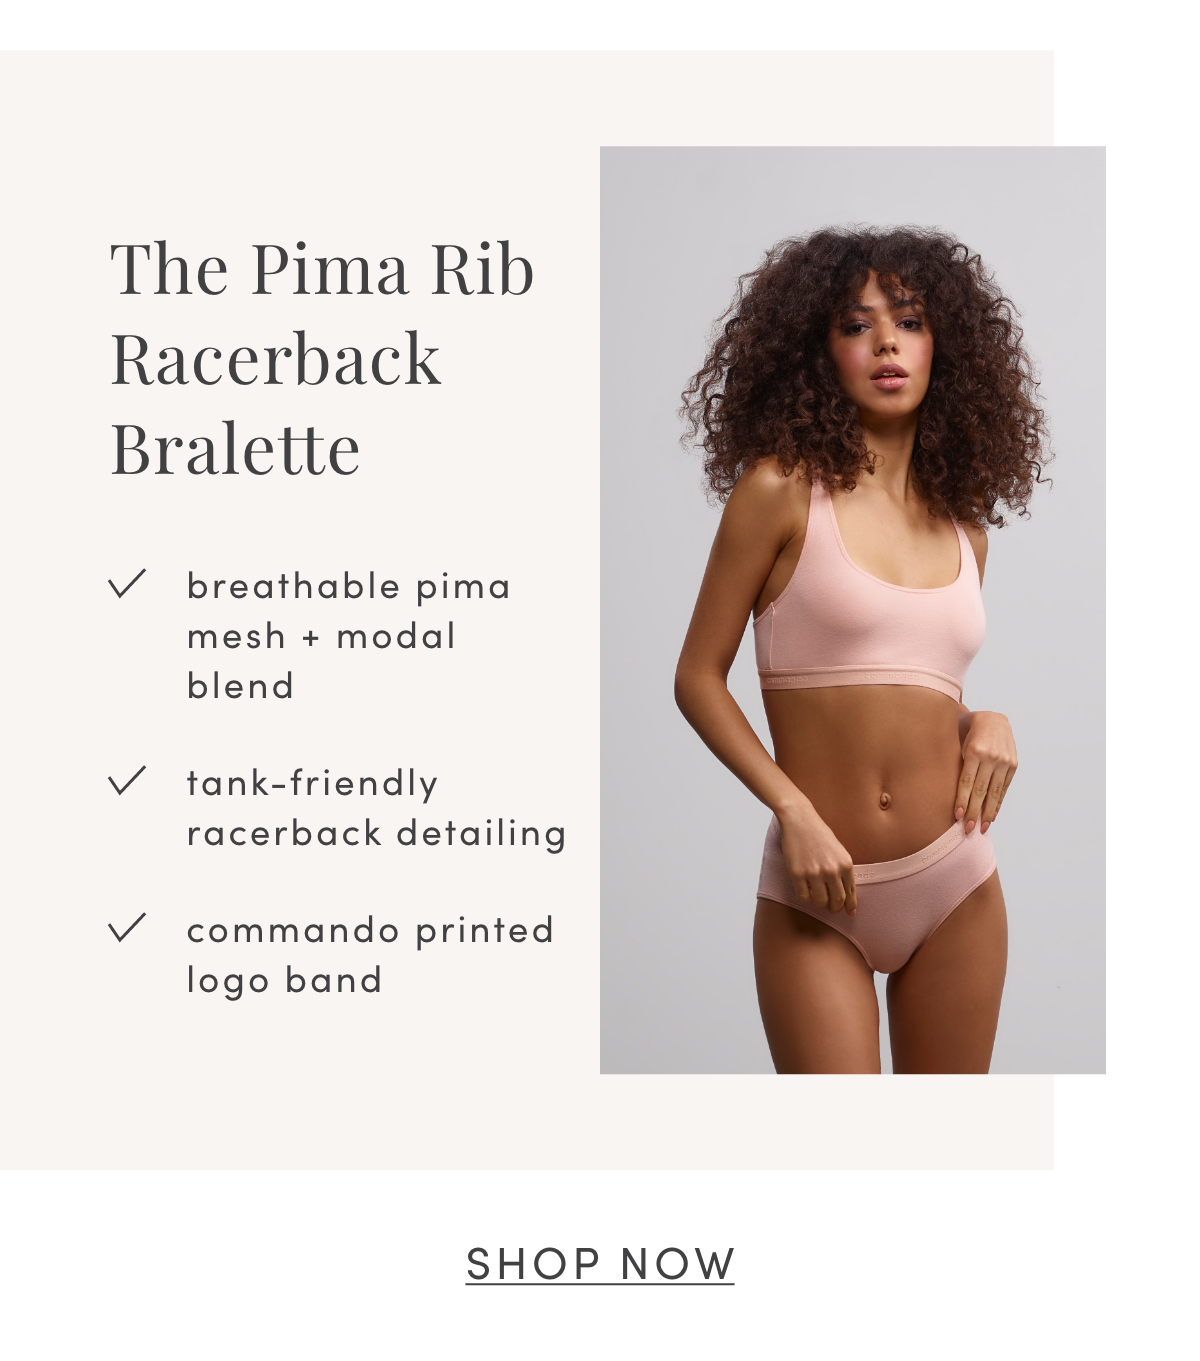 The Pima Micro Rib Racerback Bralette